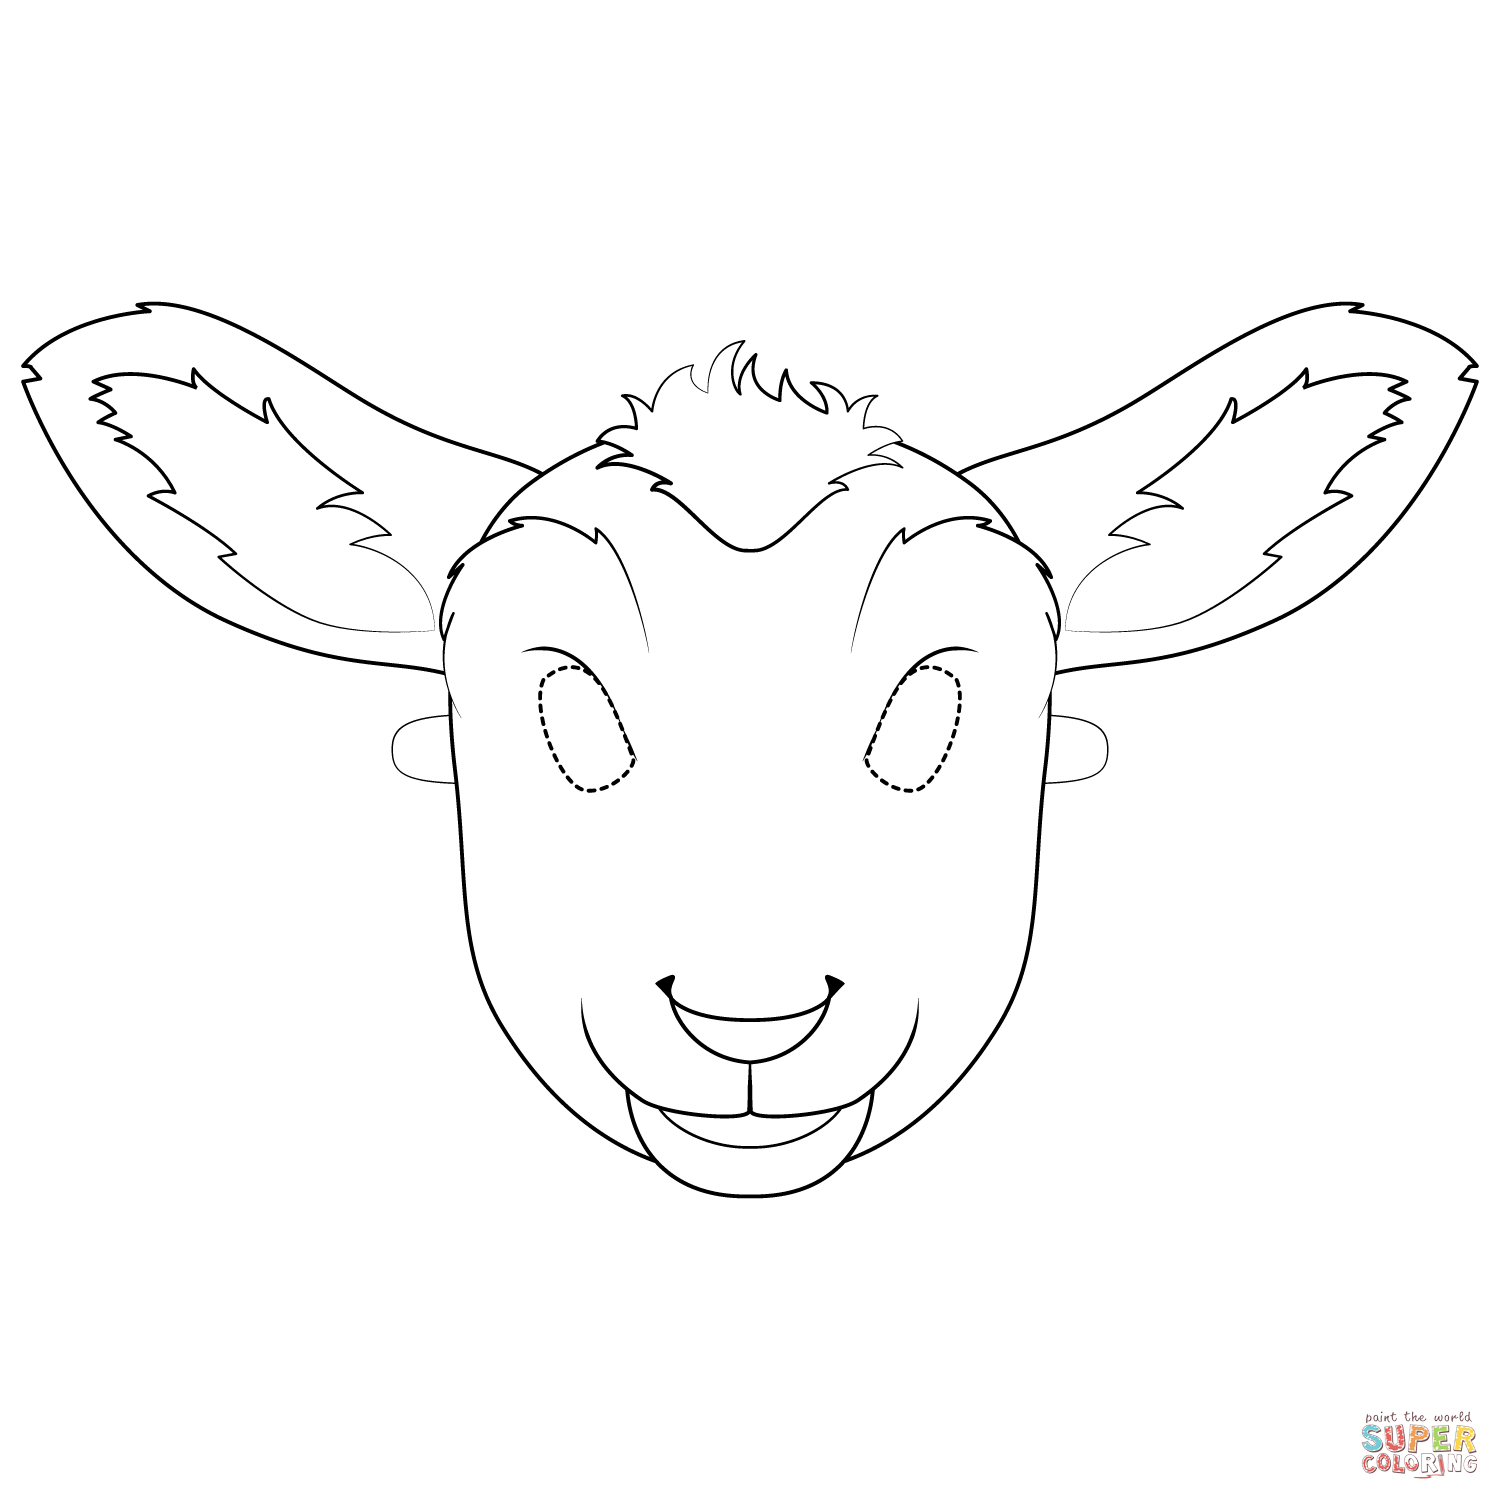 Lamb Mask Coloring Page | Free Printable Coloring Pages - Free Printable Sheep Mask